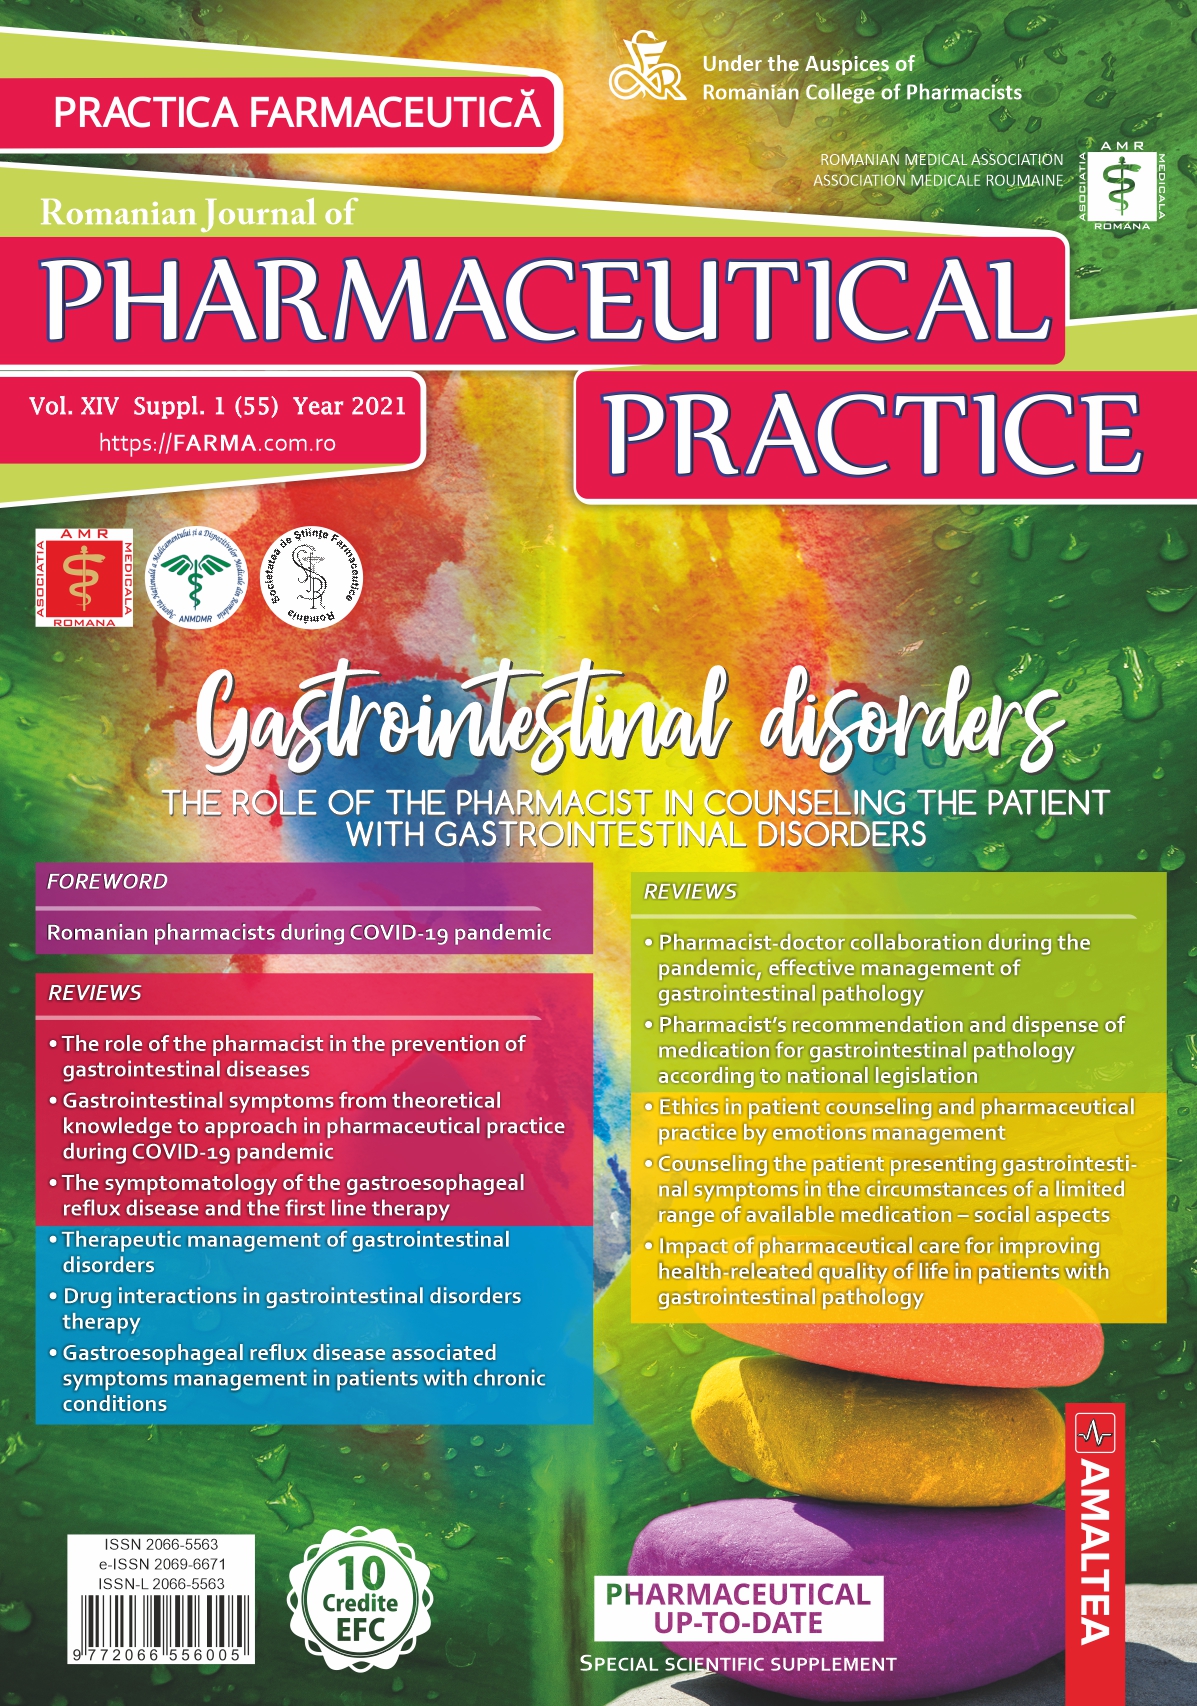 Romanian Journal of Pharmaceutical Practice - Practica Farmaceutica, Vol. XIV, Suppl. (55), 2021